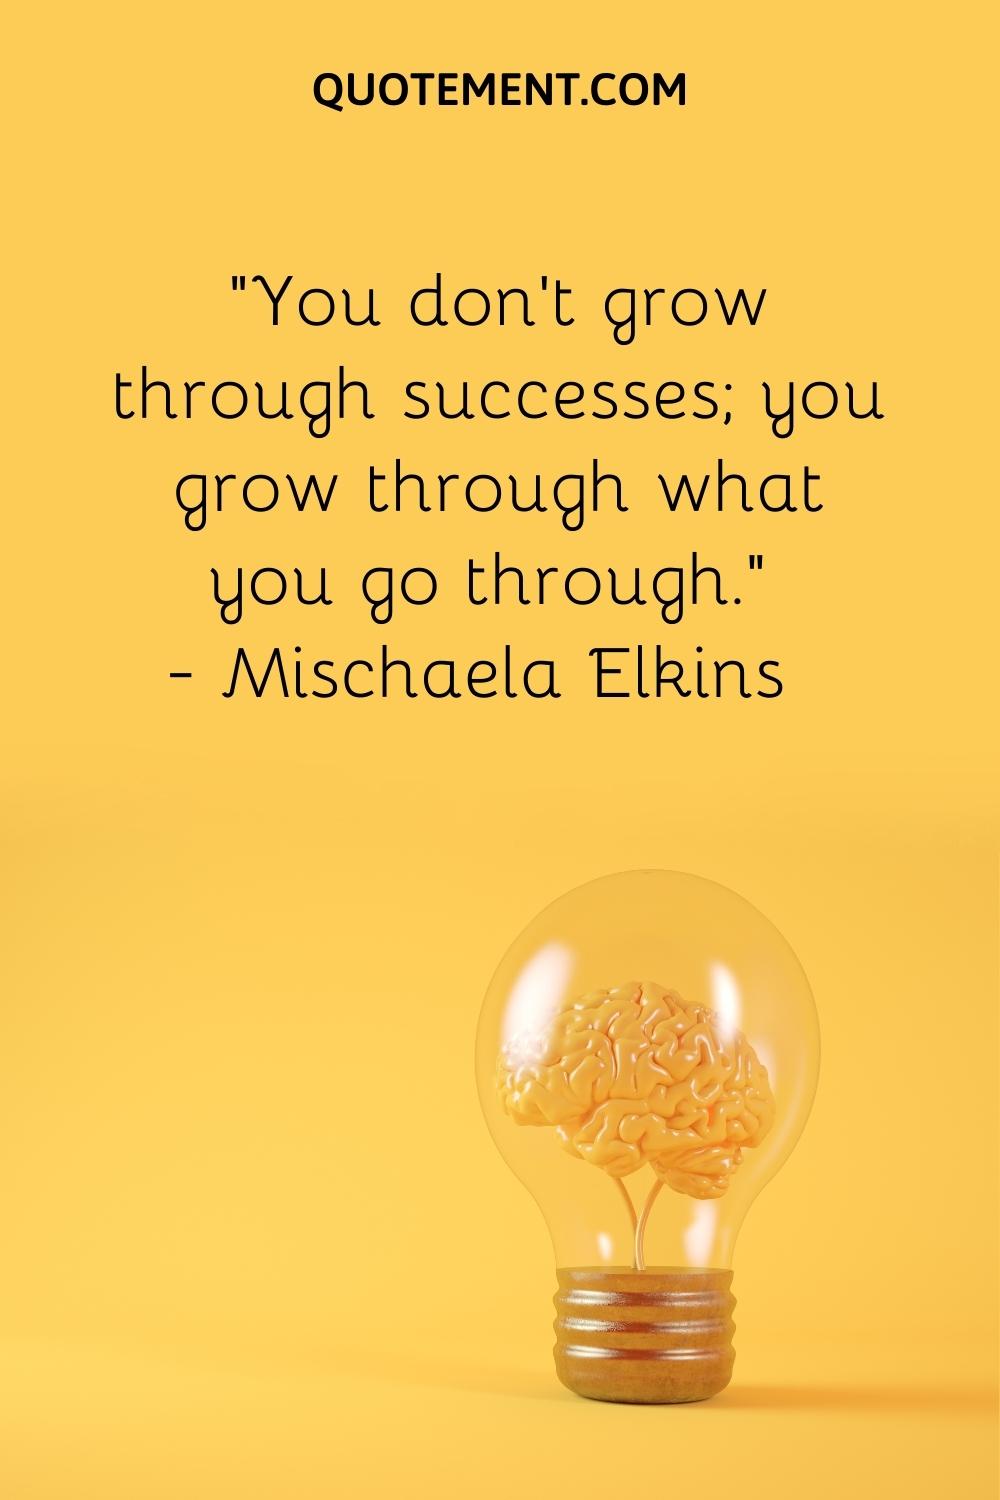 “You don’t grow through successes; you grow through what you go through.” — Mischaela Elkins